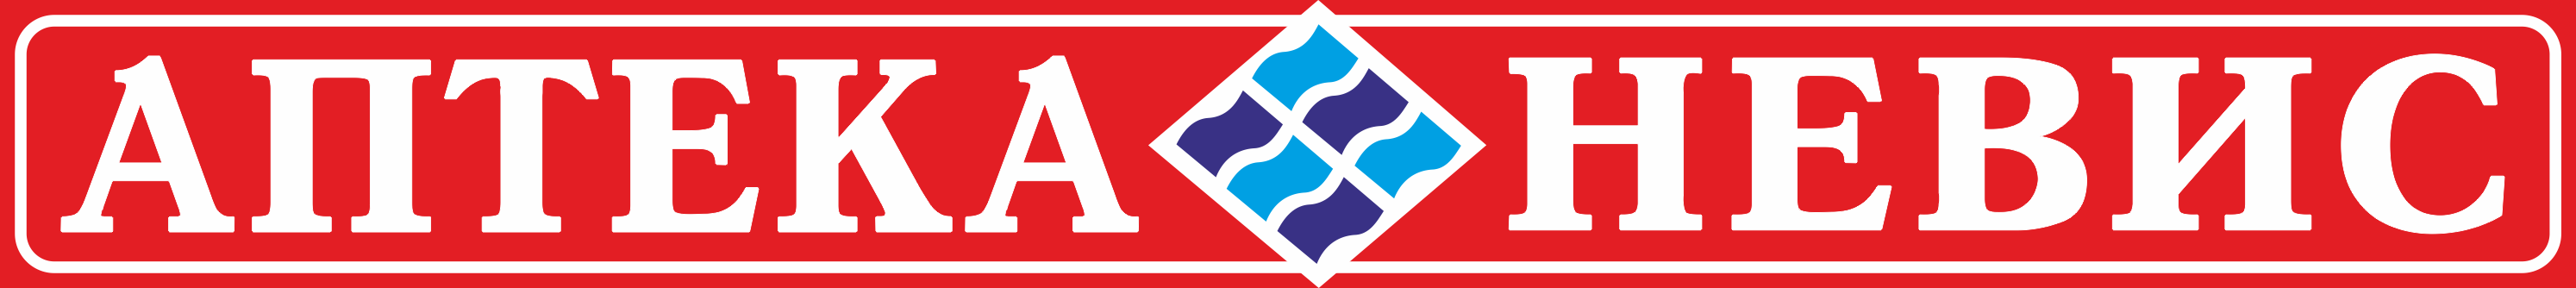 Невис logo